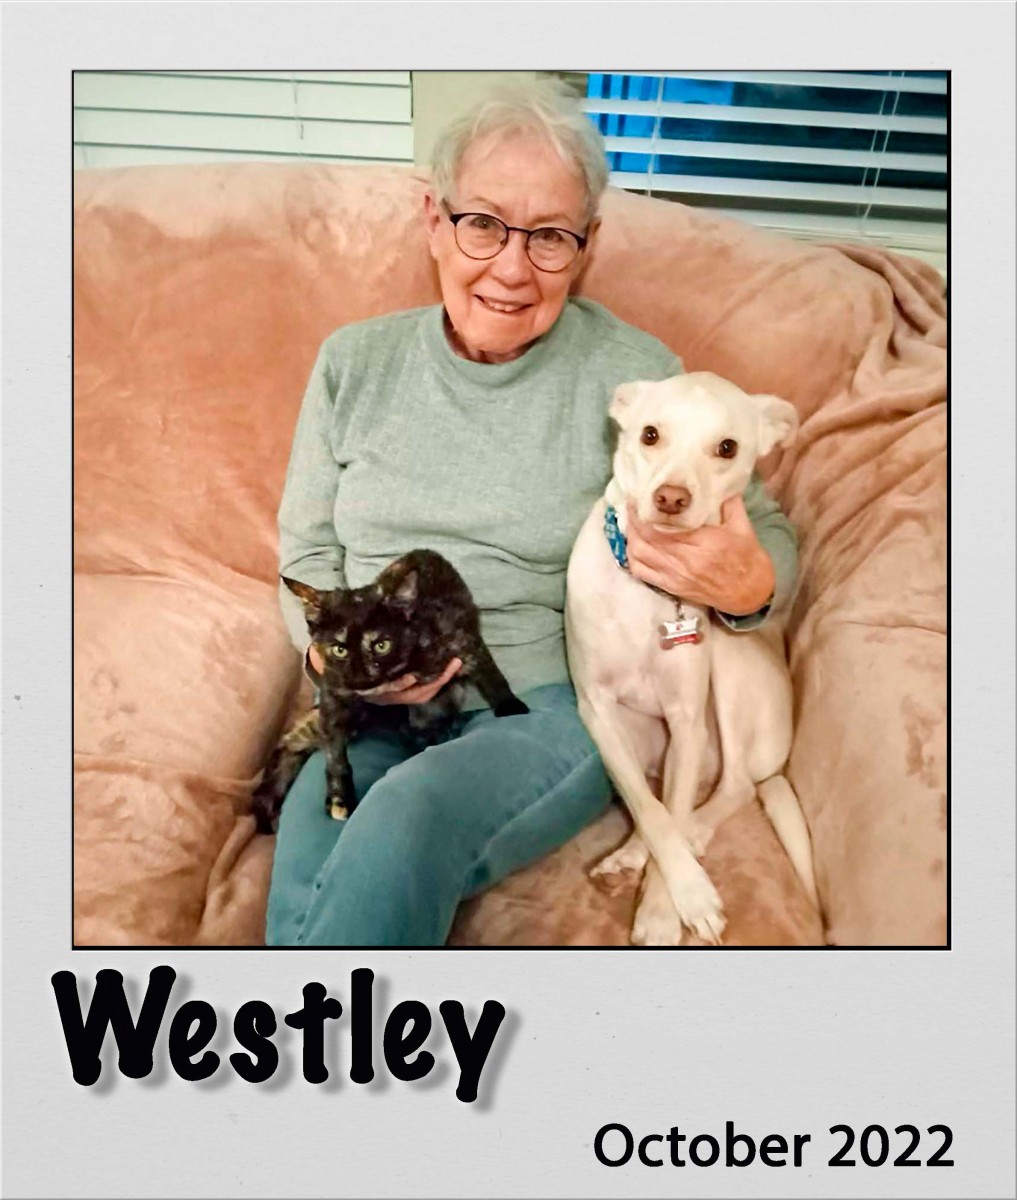 Adopt-Westley-Oct2022